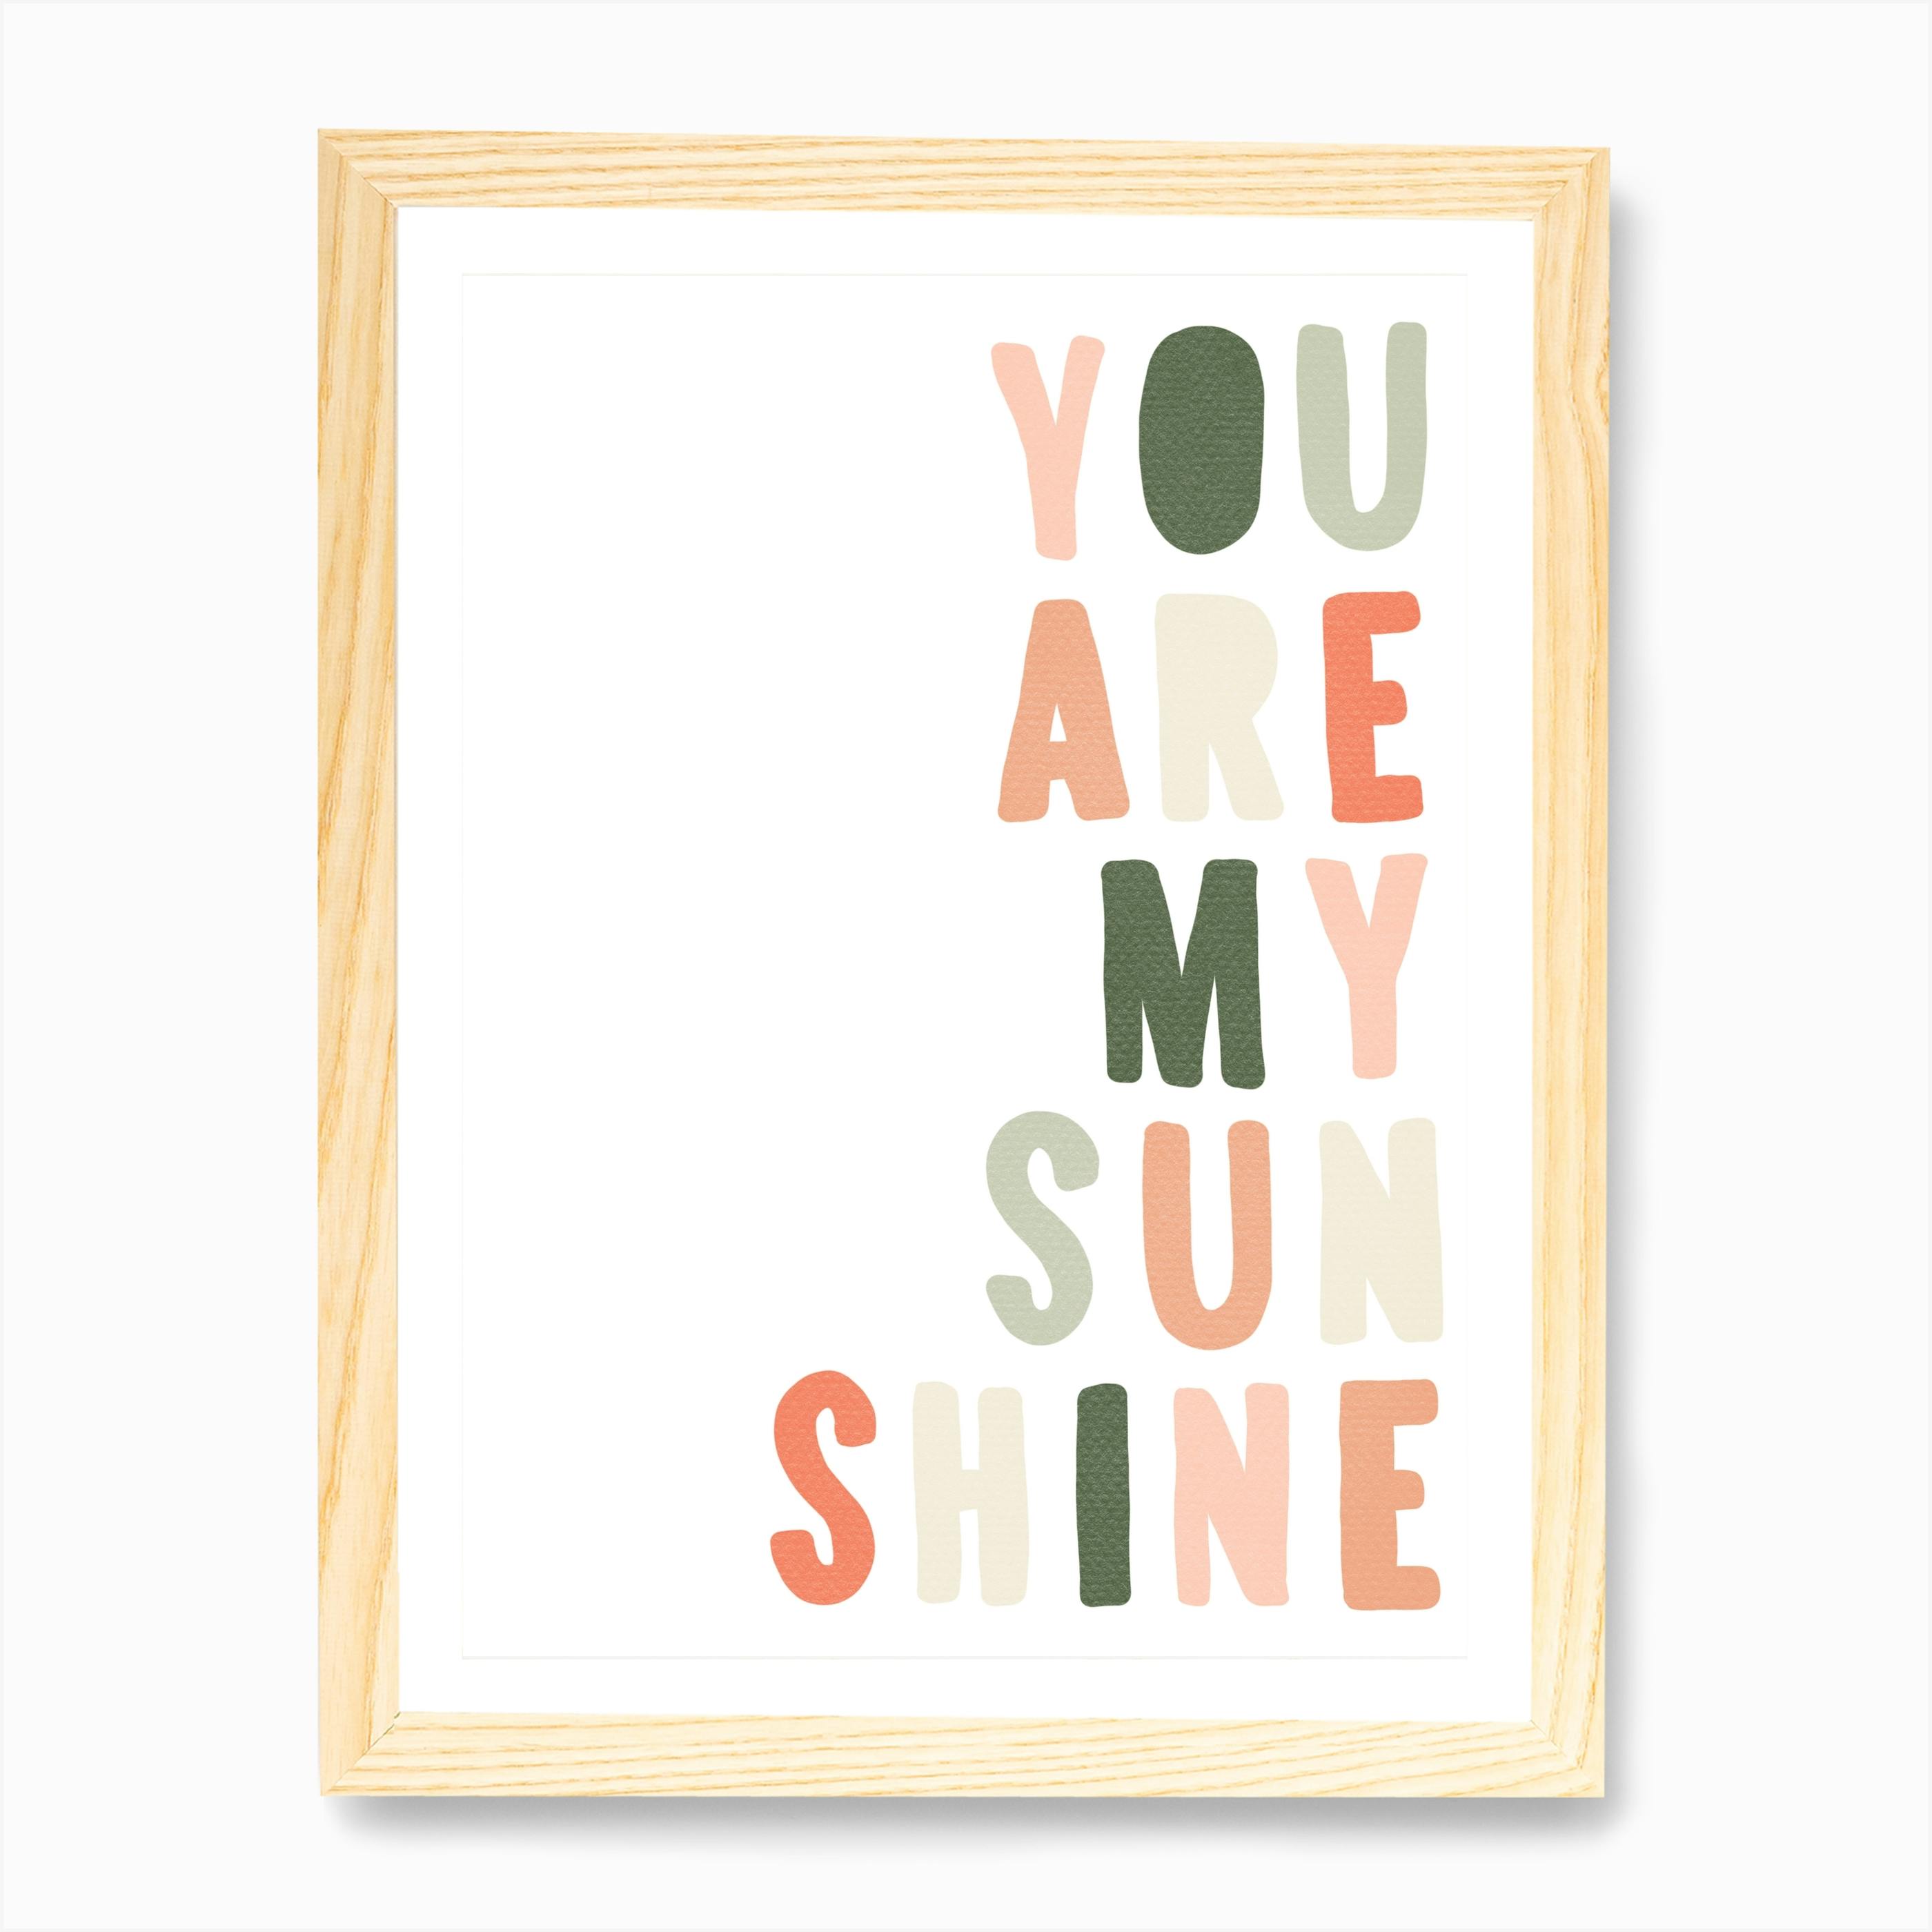 printable you are my sunshine lyrics